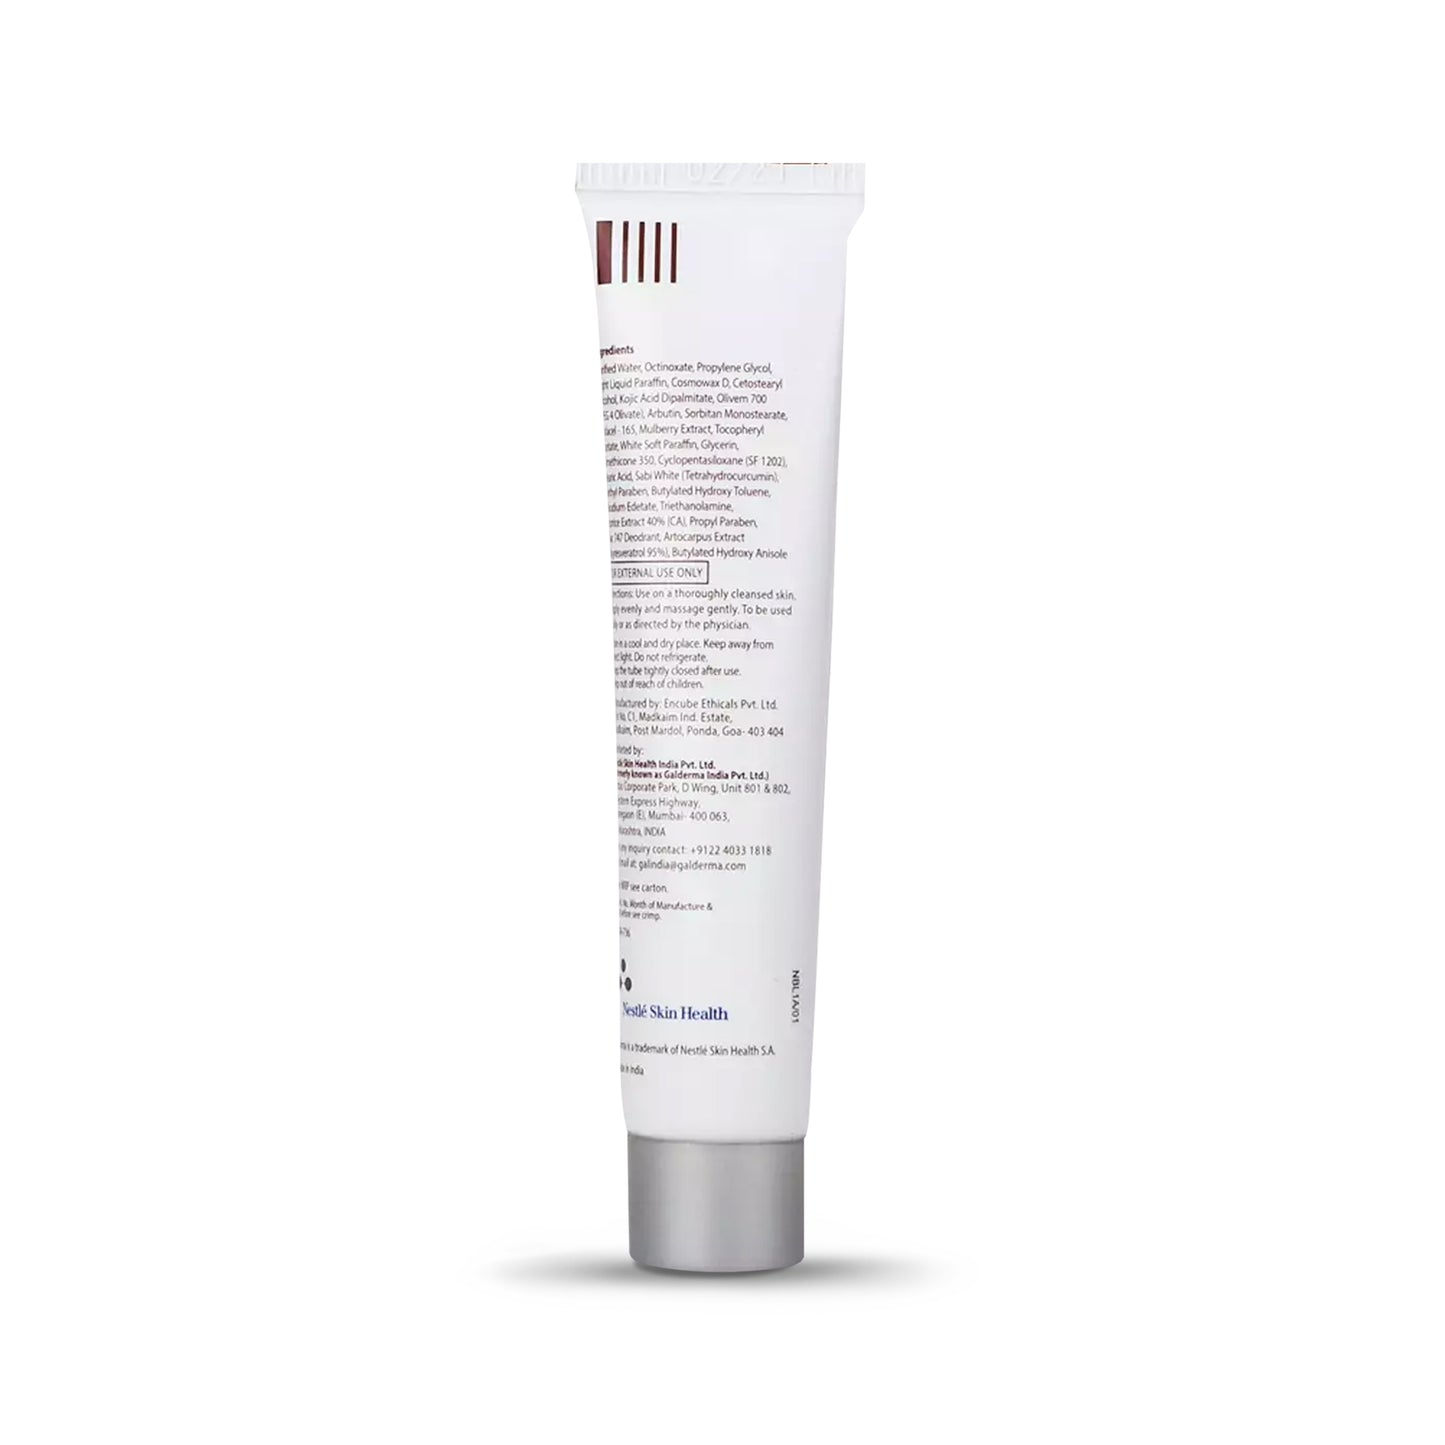 Biluma Cream,15gm - Depigmenting & Skin Lightening Cream For Even Skin Tone & Glow